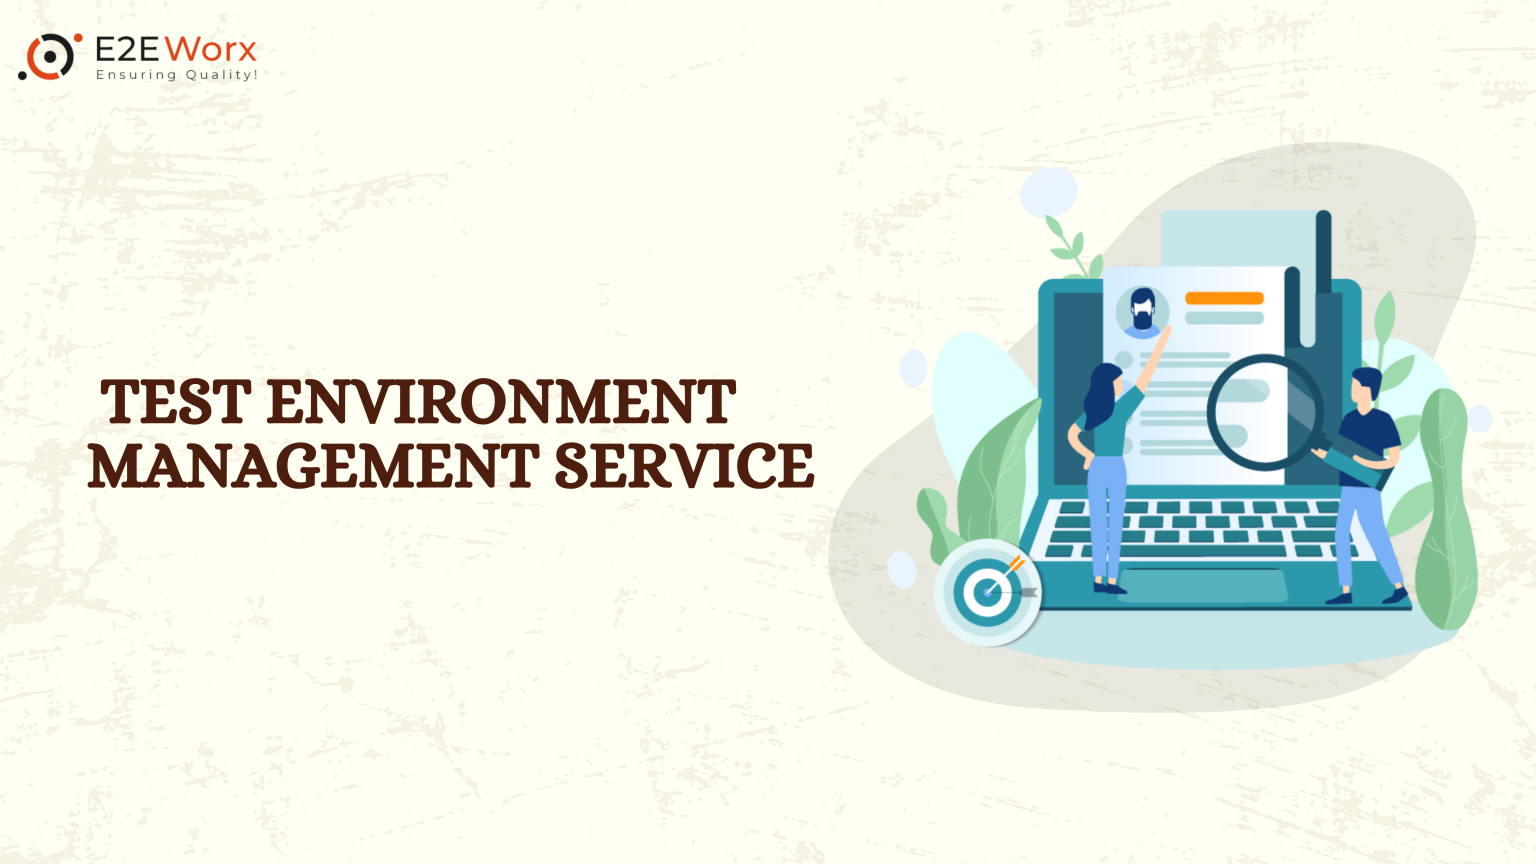 Test Environment Management Services (TEMS) - E2EWorx Ensuring Quality